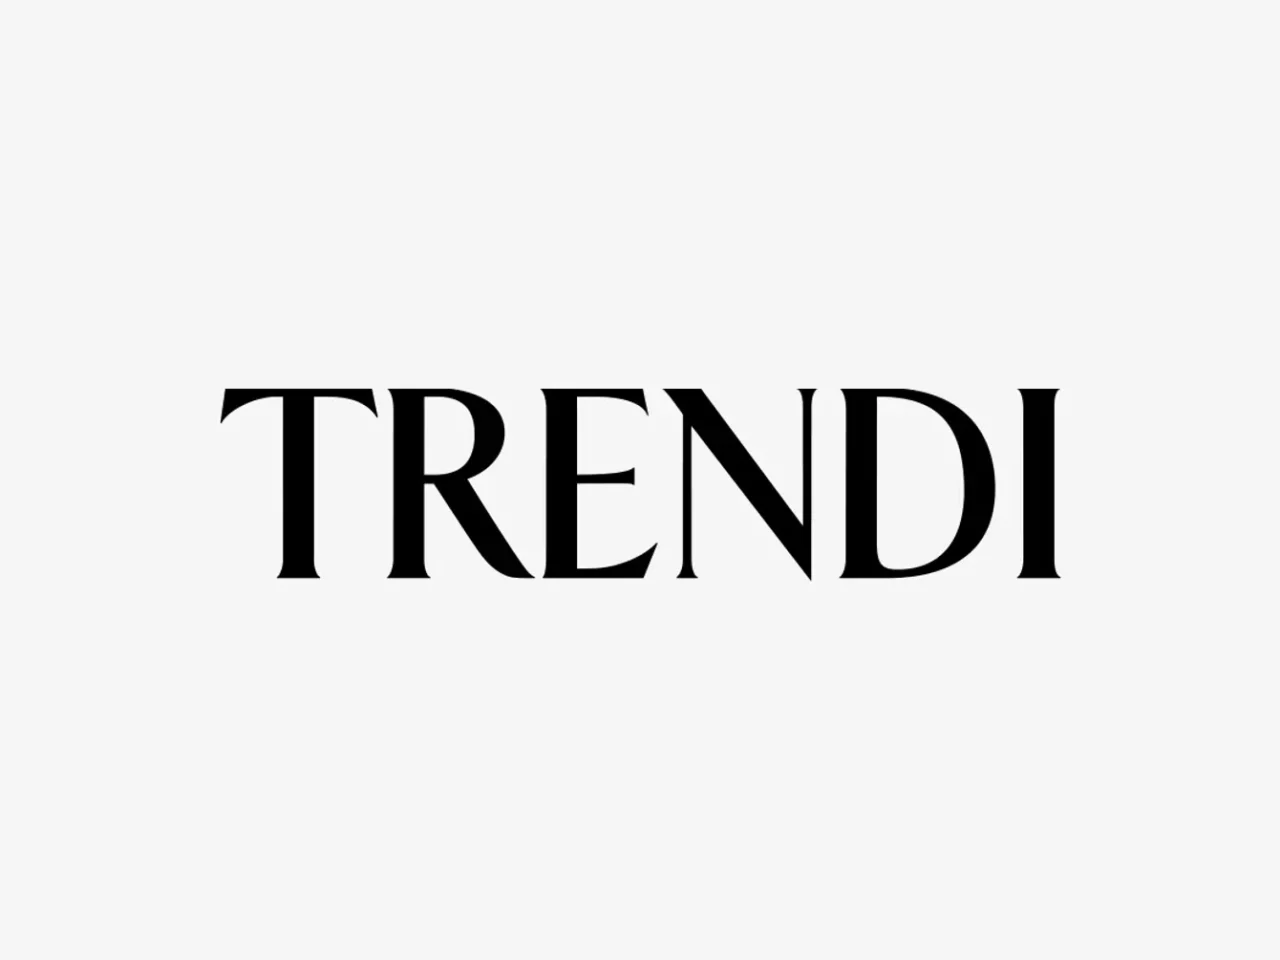 Trendi lehti logo